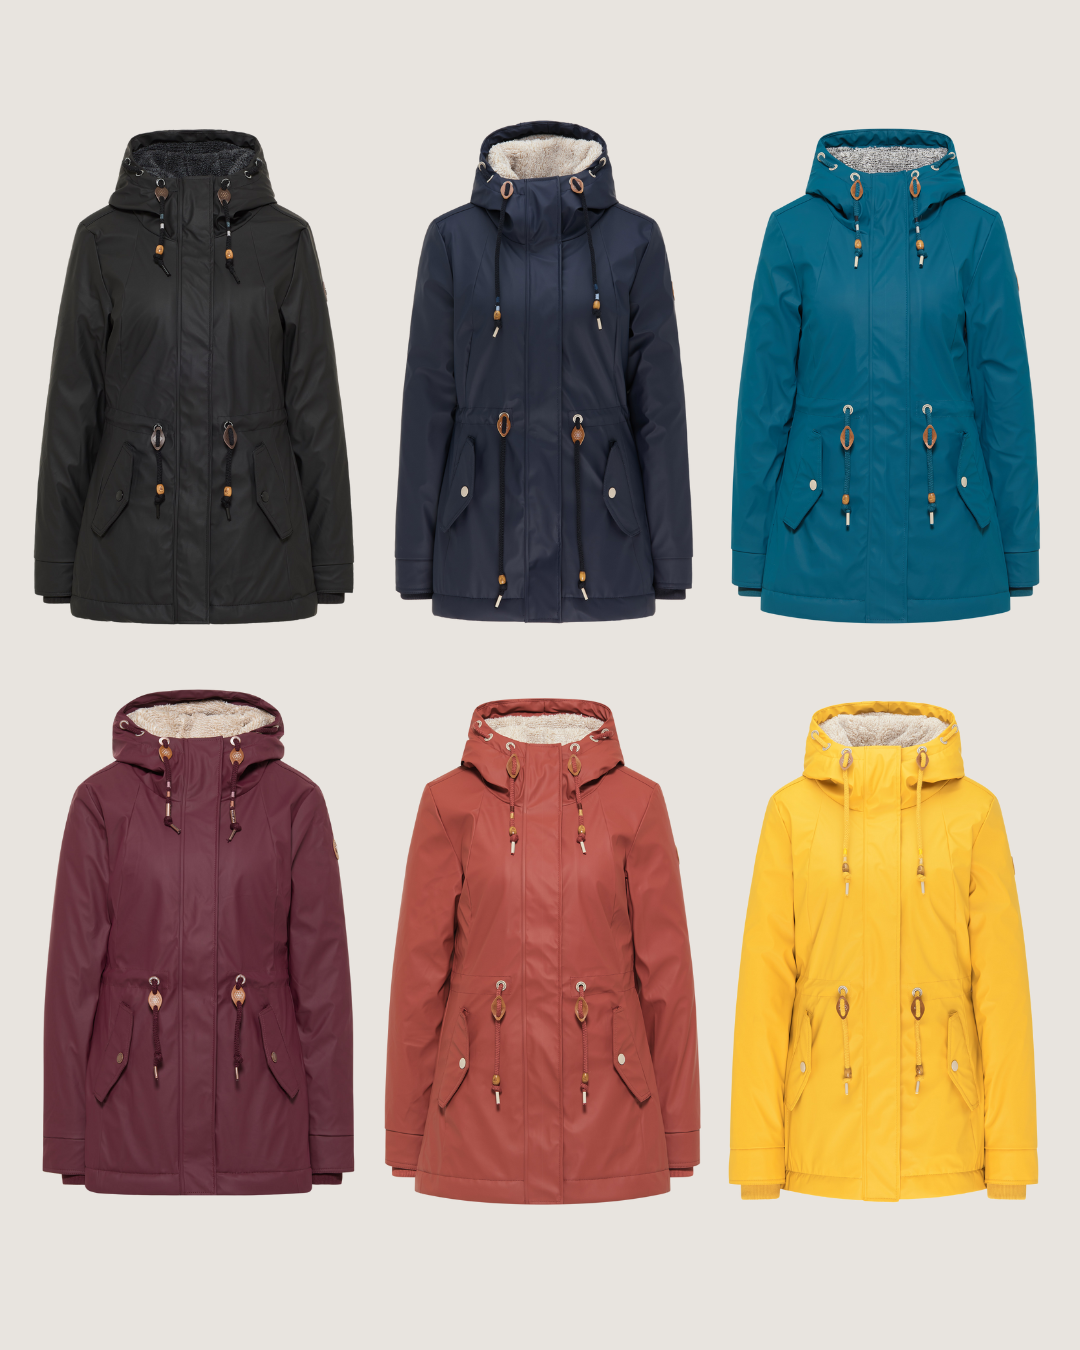 ragwear rain | season! | this wear Top Magazine Stylish jackets to